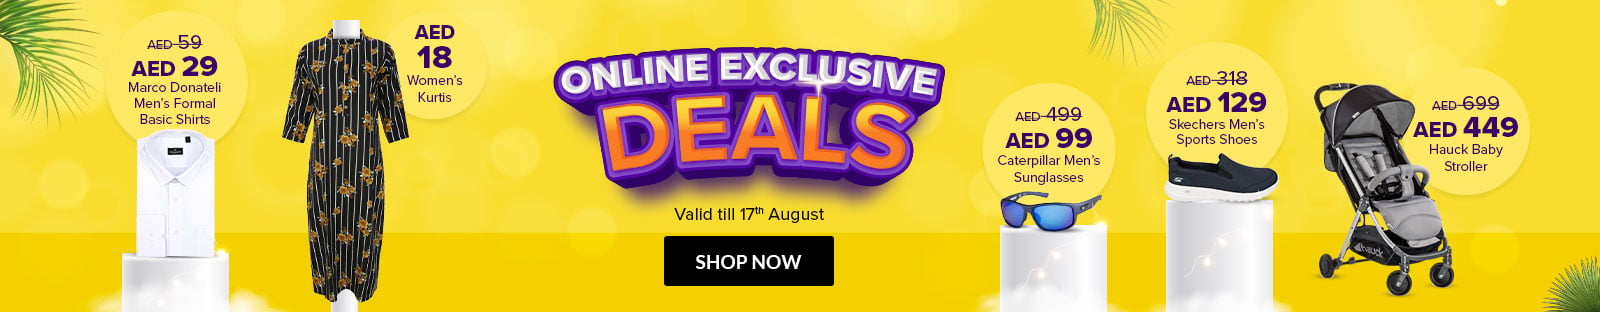 Online Exclusive Deals -FASHION